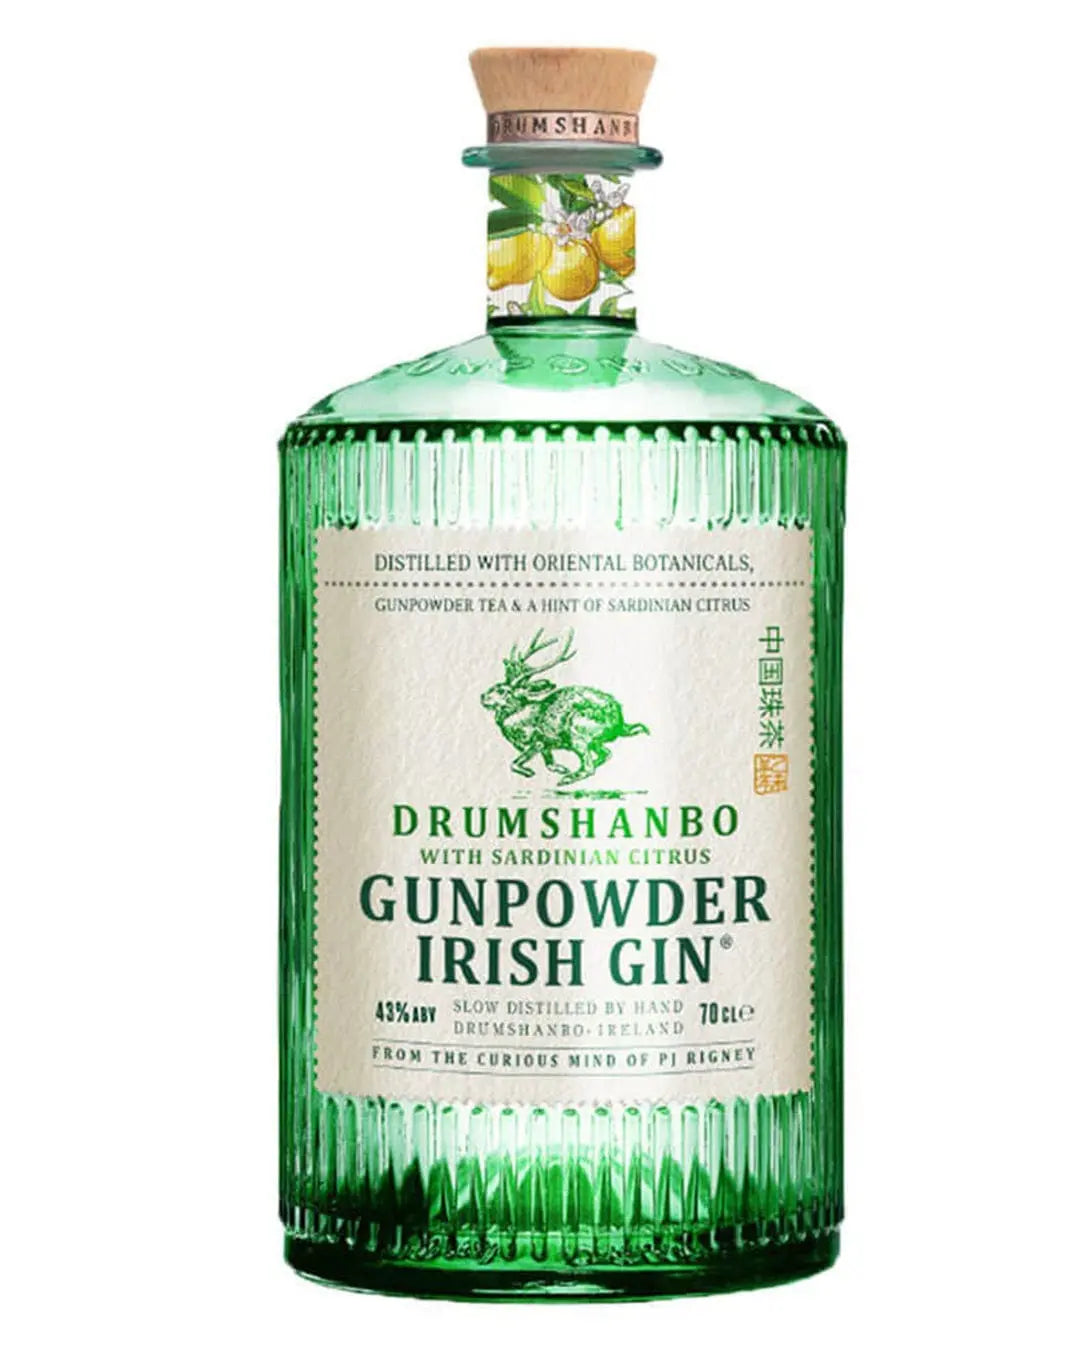 Drumshanbo with Sardinian Citrus Gunpowder Irish Gin, 70 cl Gin